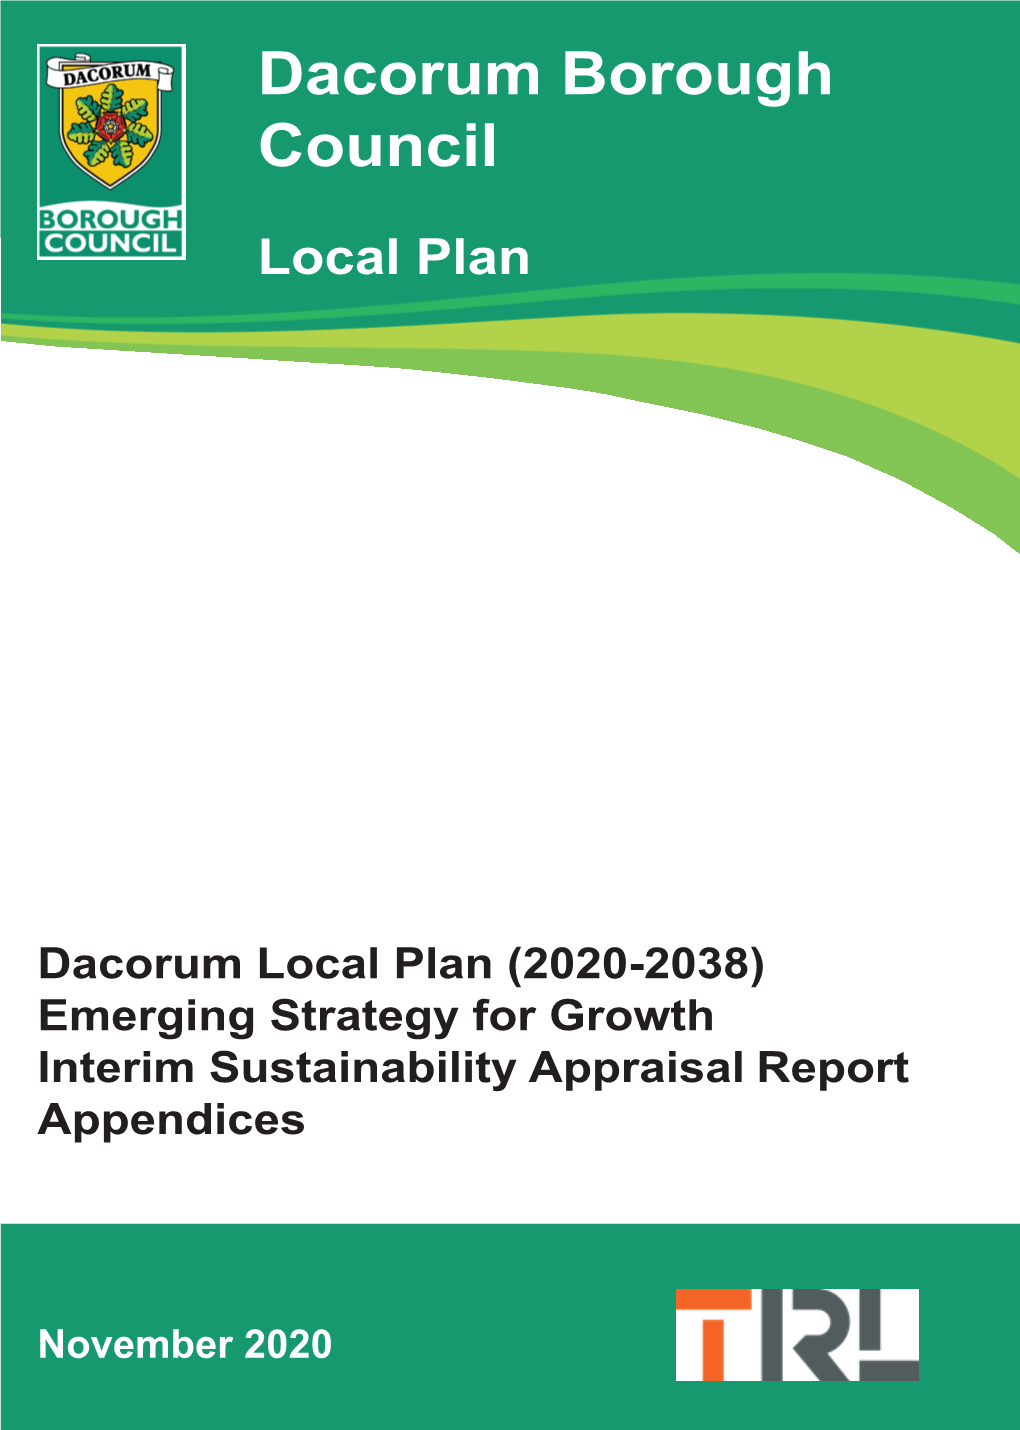 Dacorum Local Plan Interim Sustainability Appraisal Report